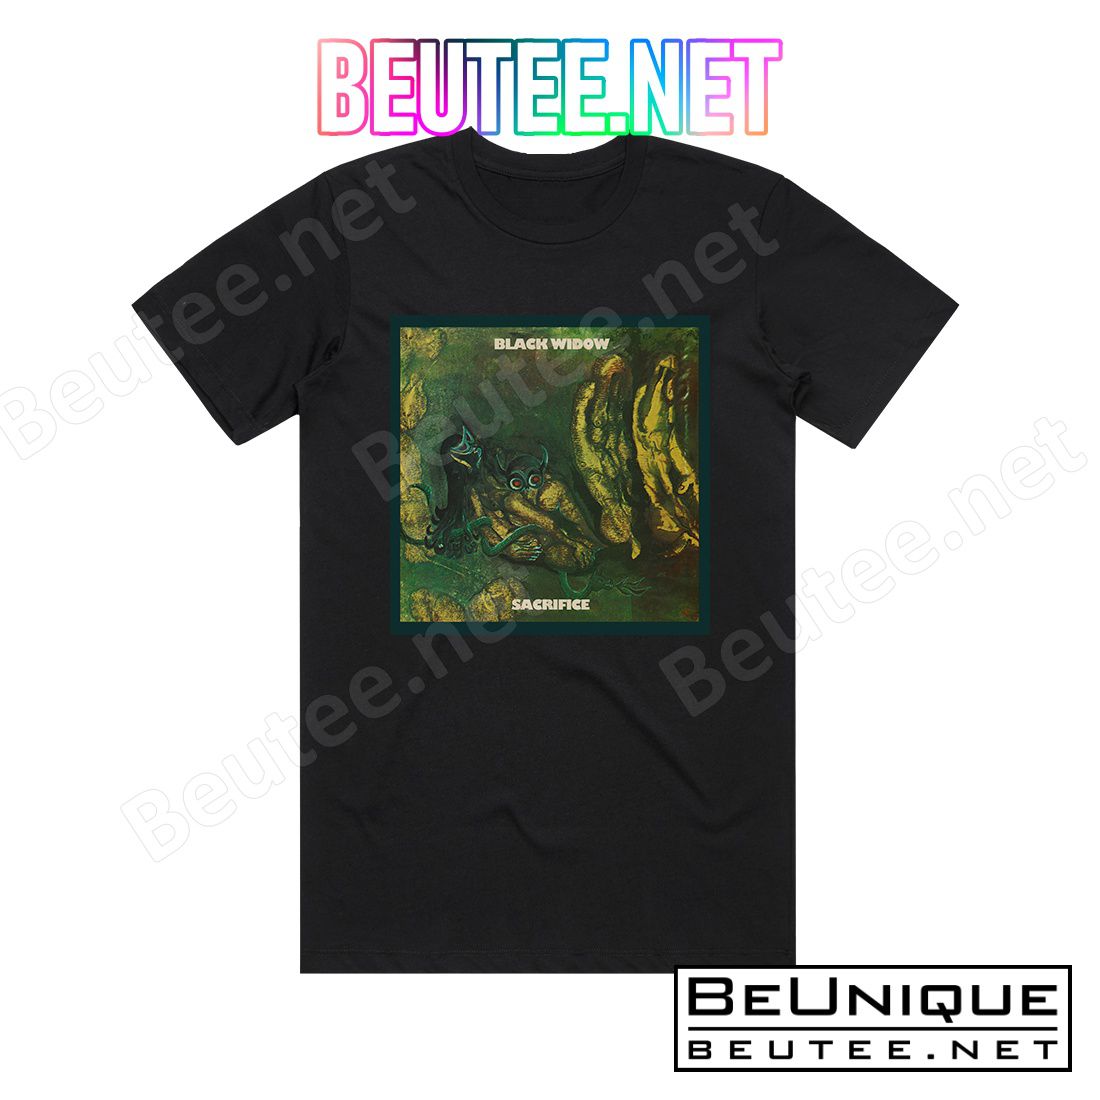 Black Widow Sacrifice Album Cover T-Shirt